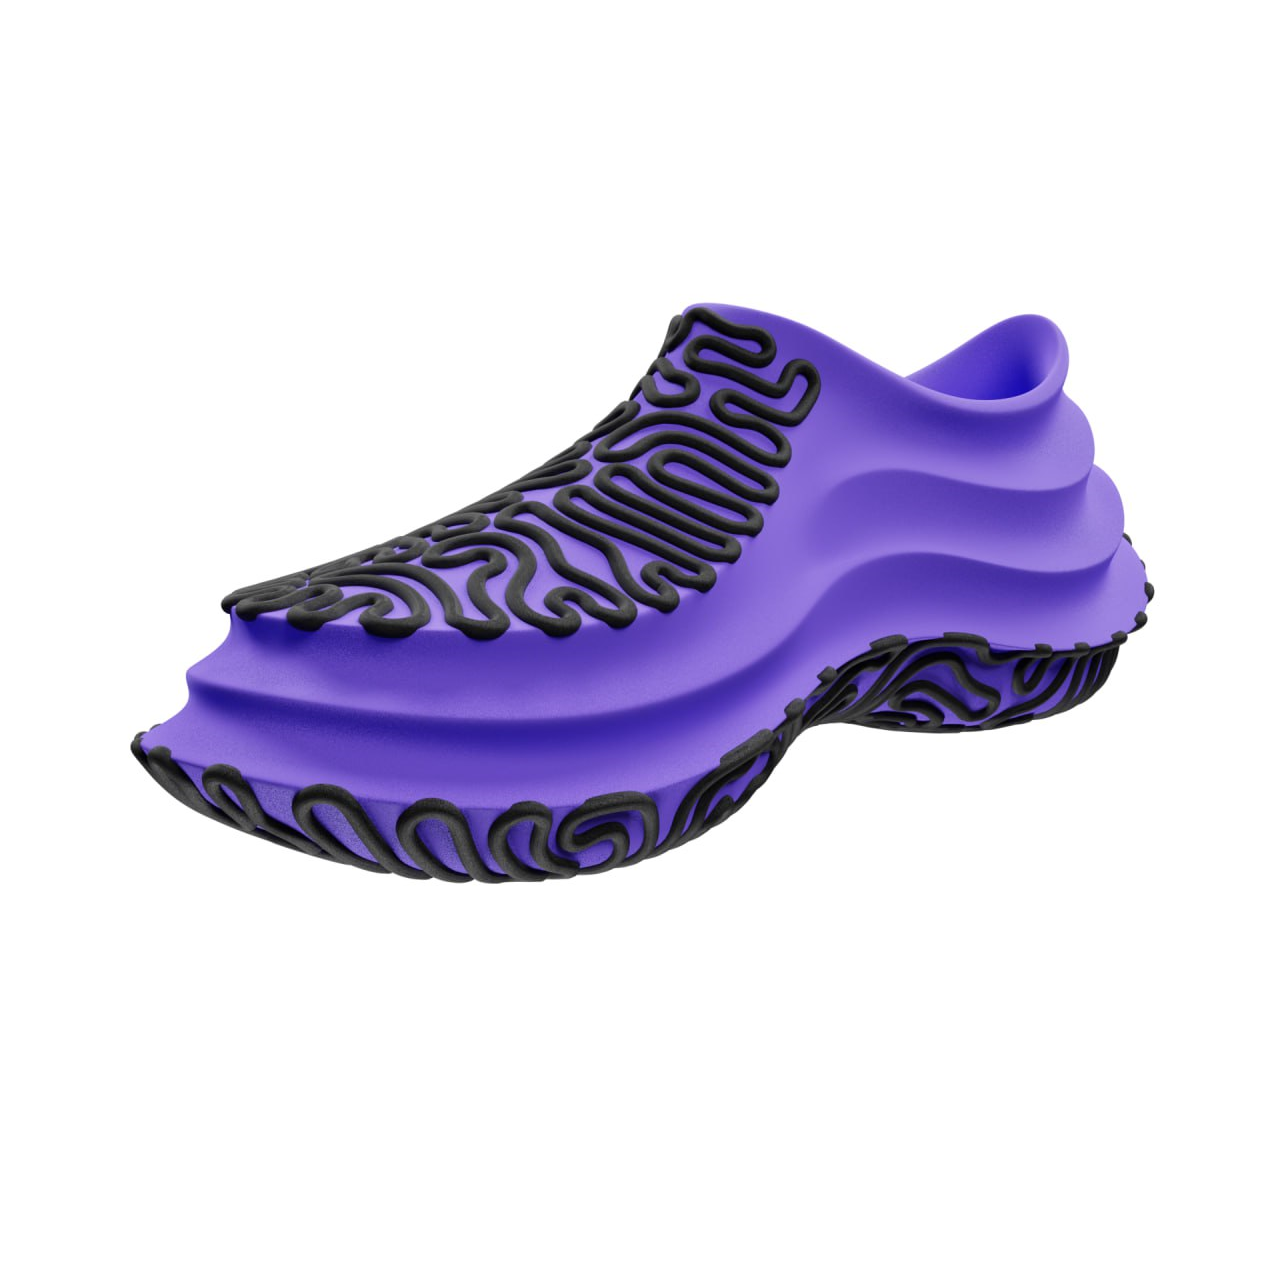 Koobz 3D Printed Shoes